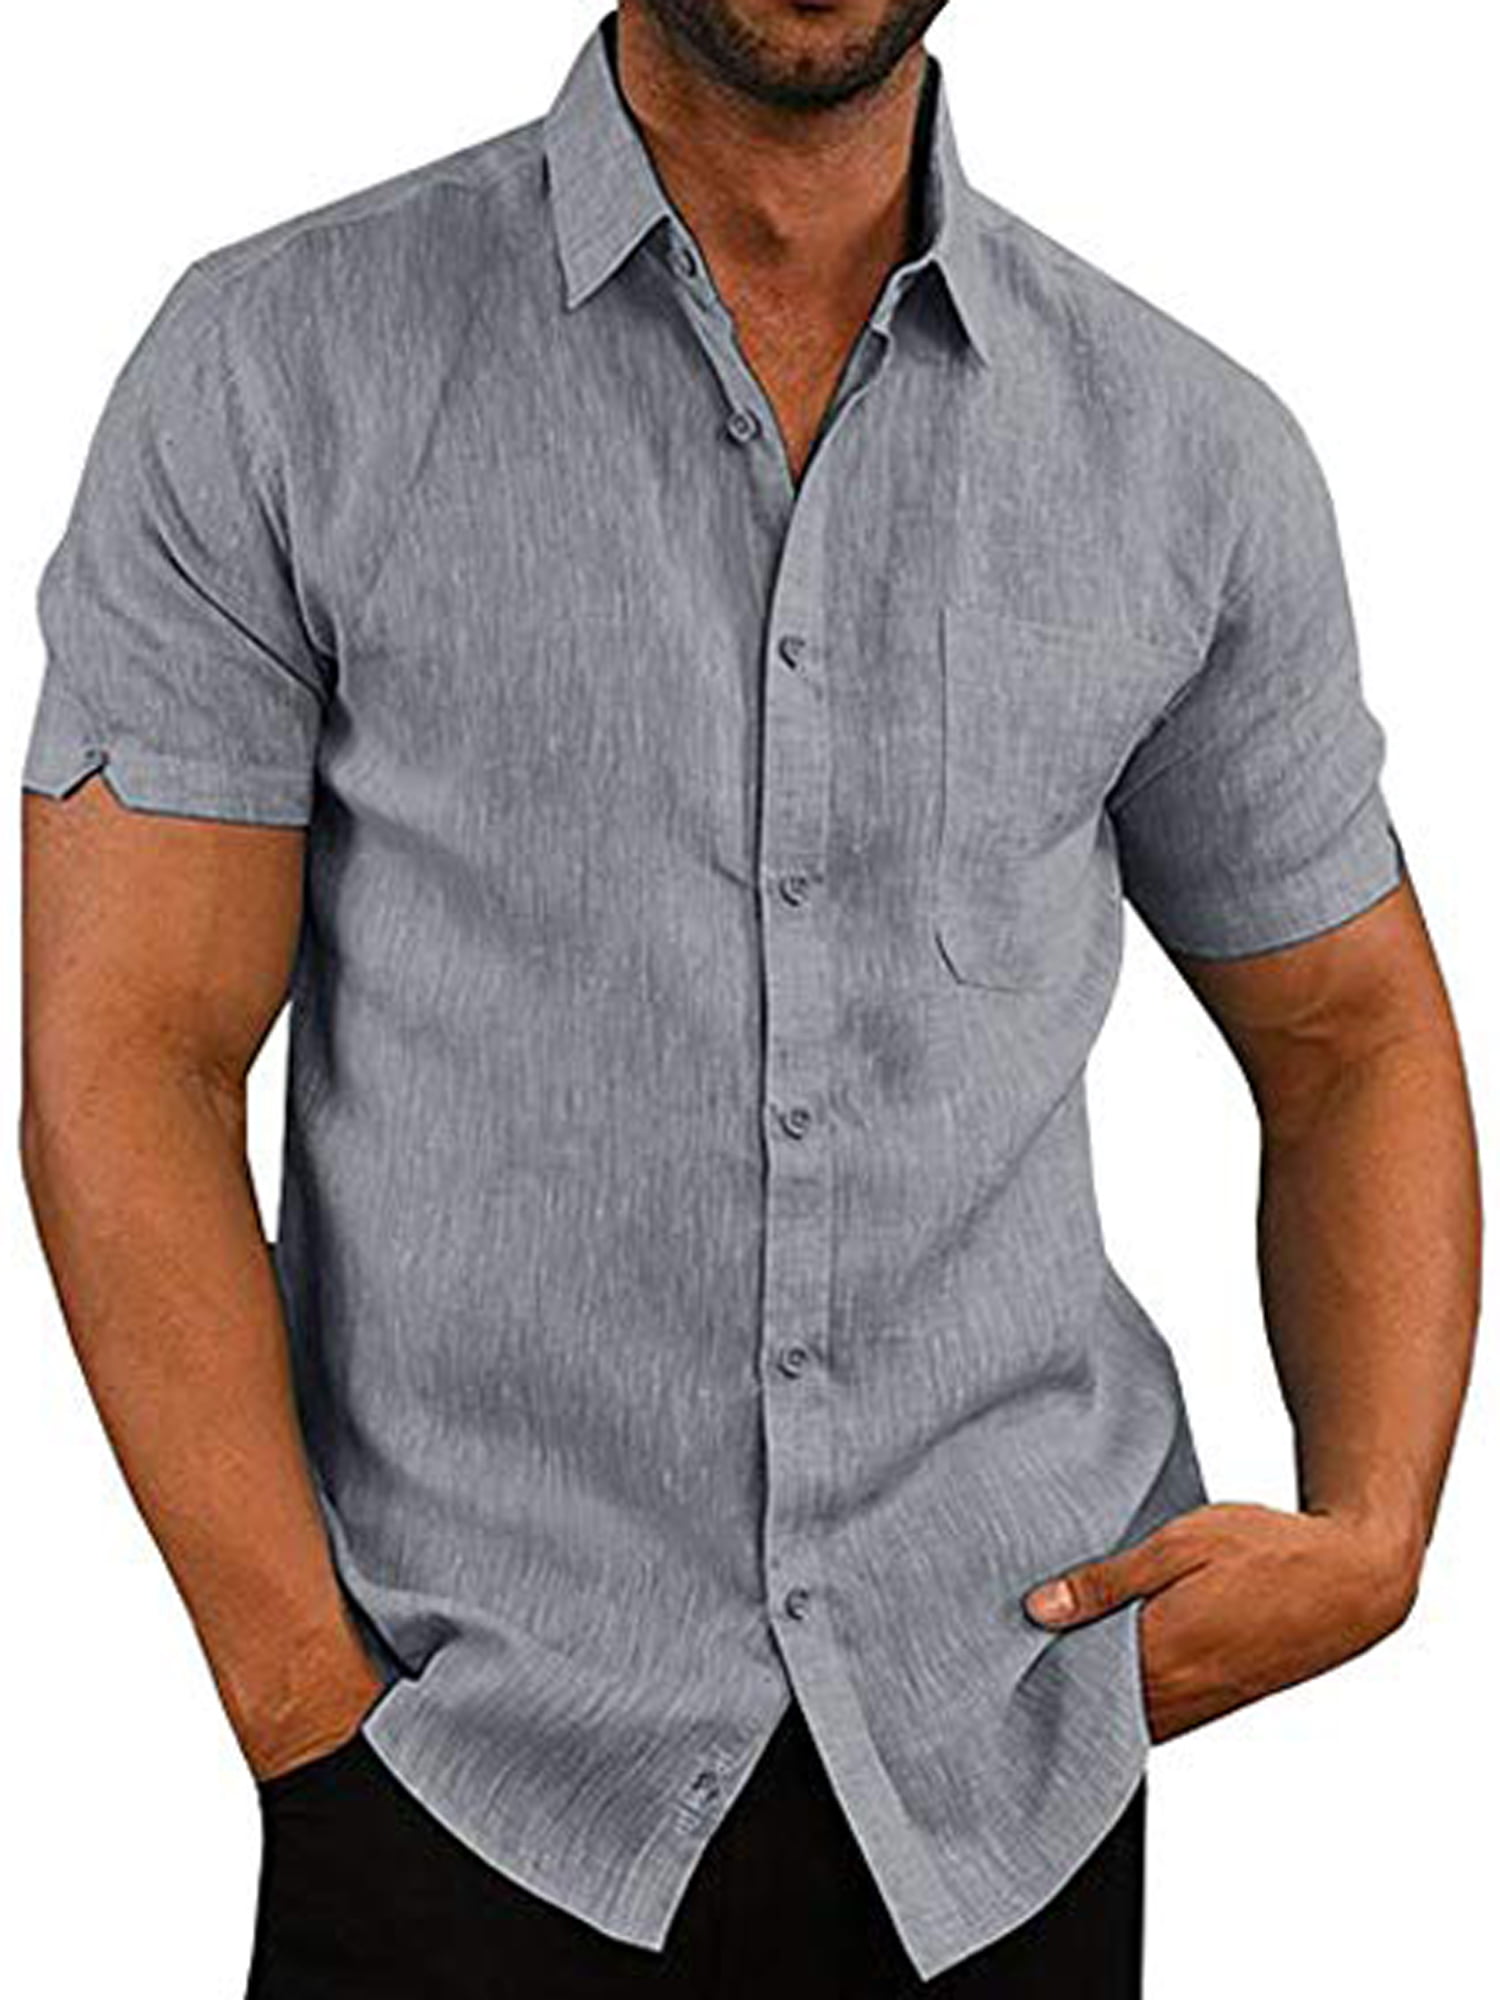 Canserin Mens Casual Cotton Linen Shirts Summer Beach Button Up T Shirts Tops